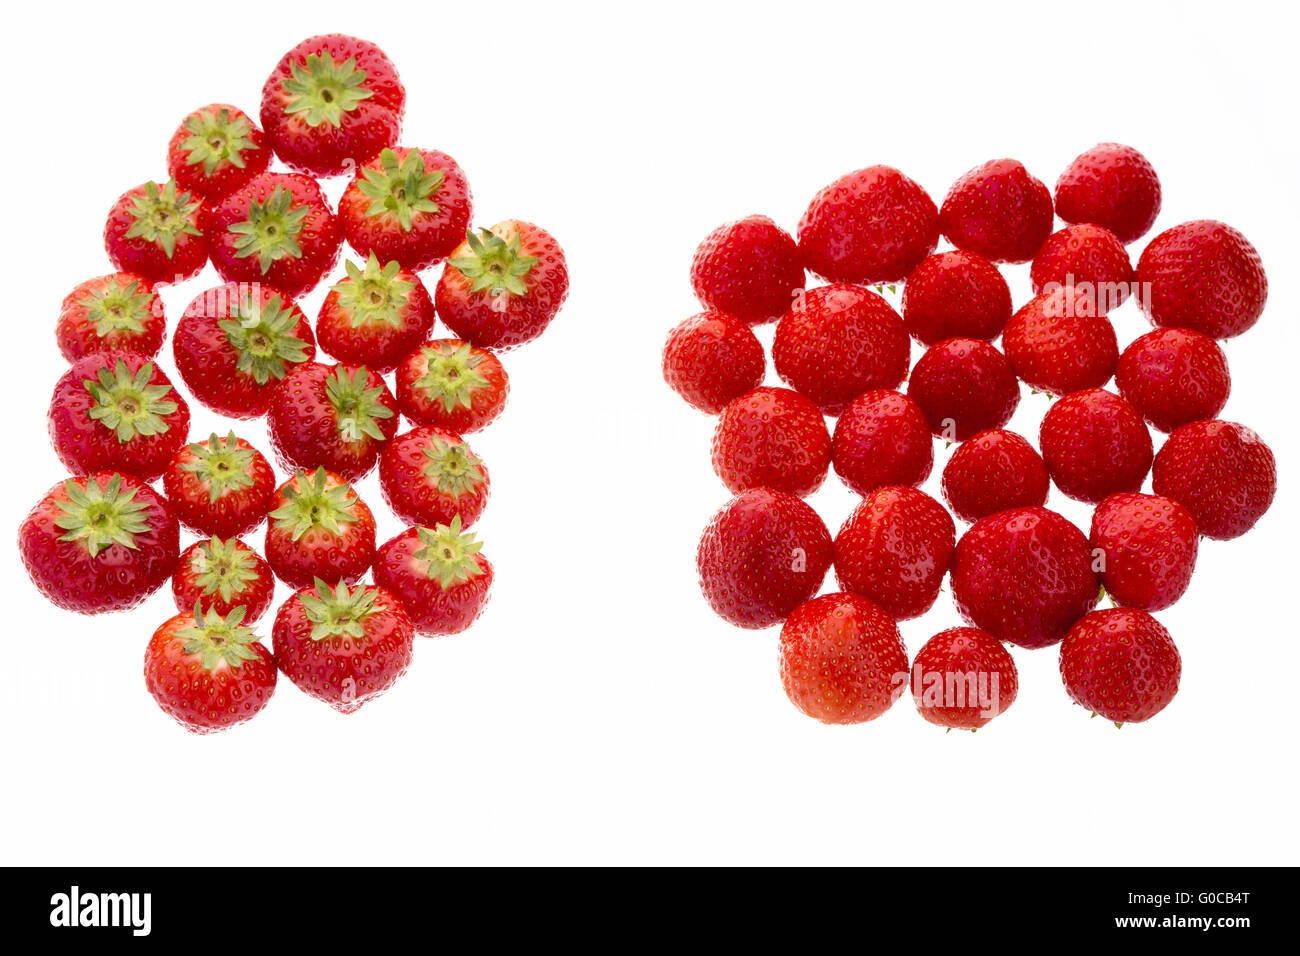 Erdbeeren In zwei Gruppen angeordnet, über weiß Stockfoto